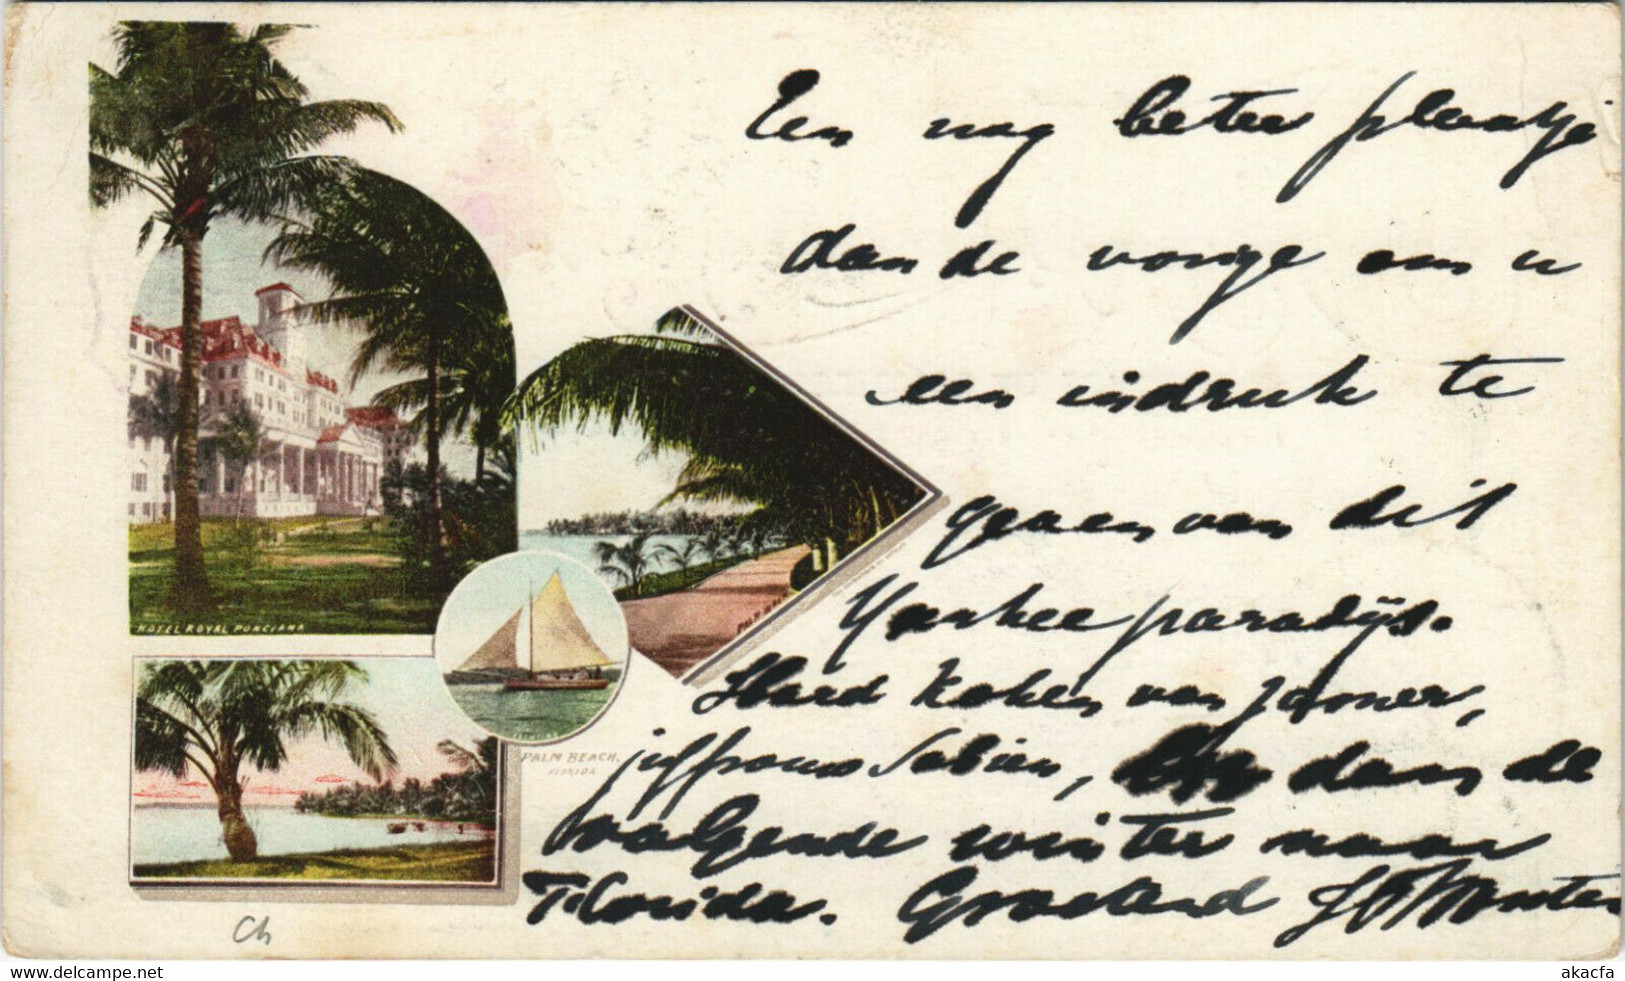 PC US, FL, SCENES FROM PALM BEACH, Vintage Postcard (b32155) - Palm Beach